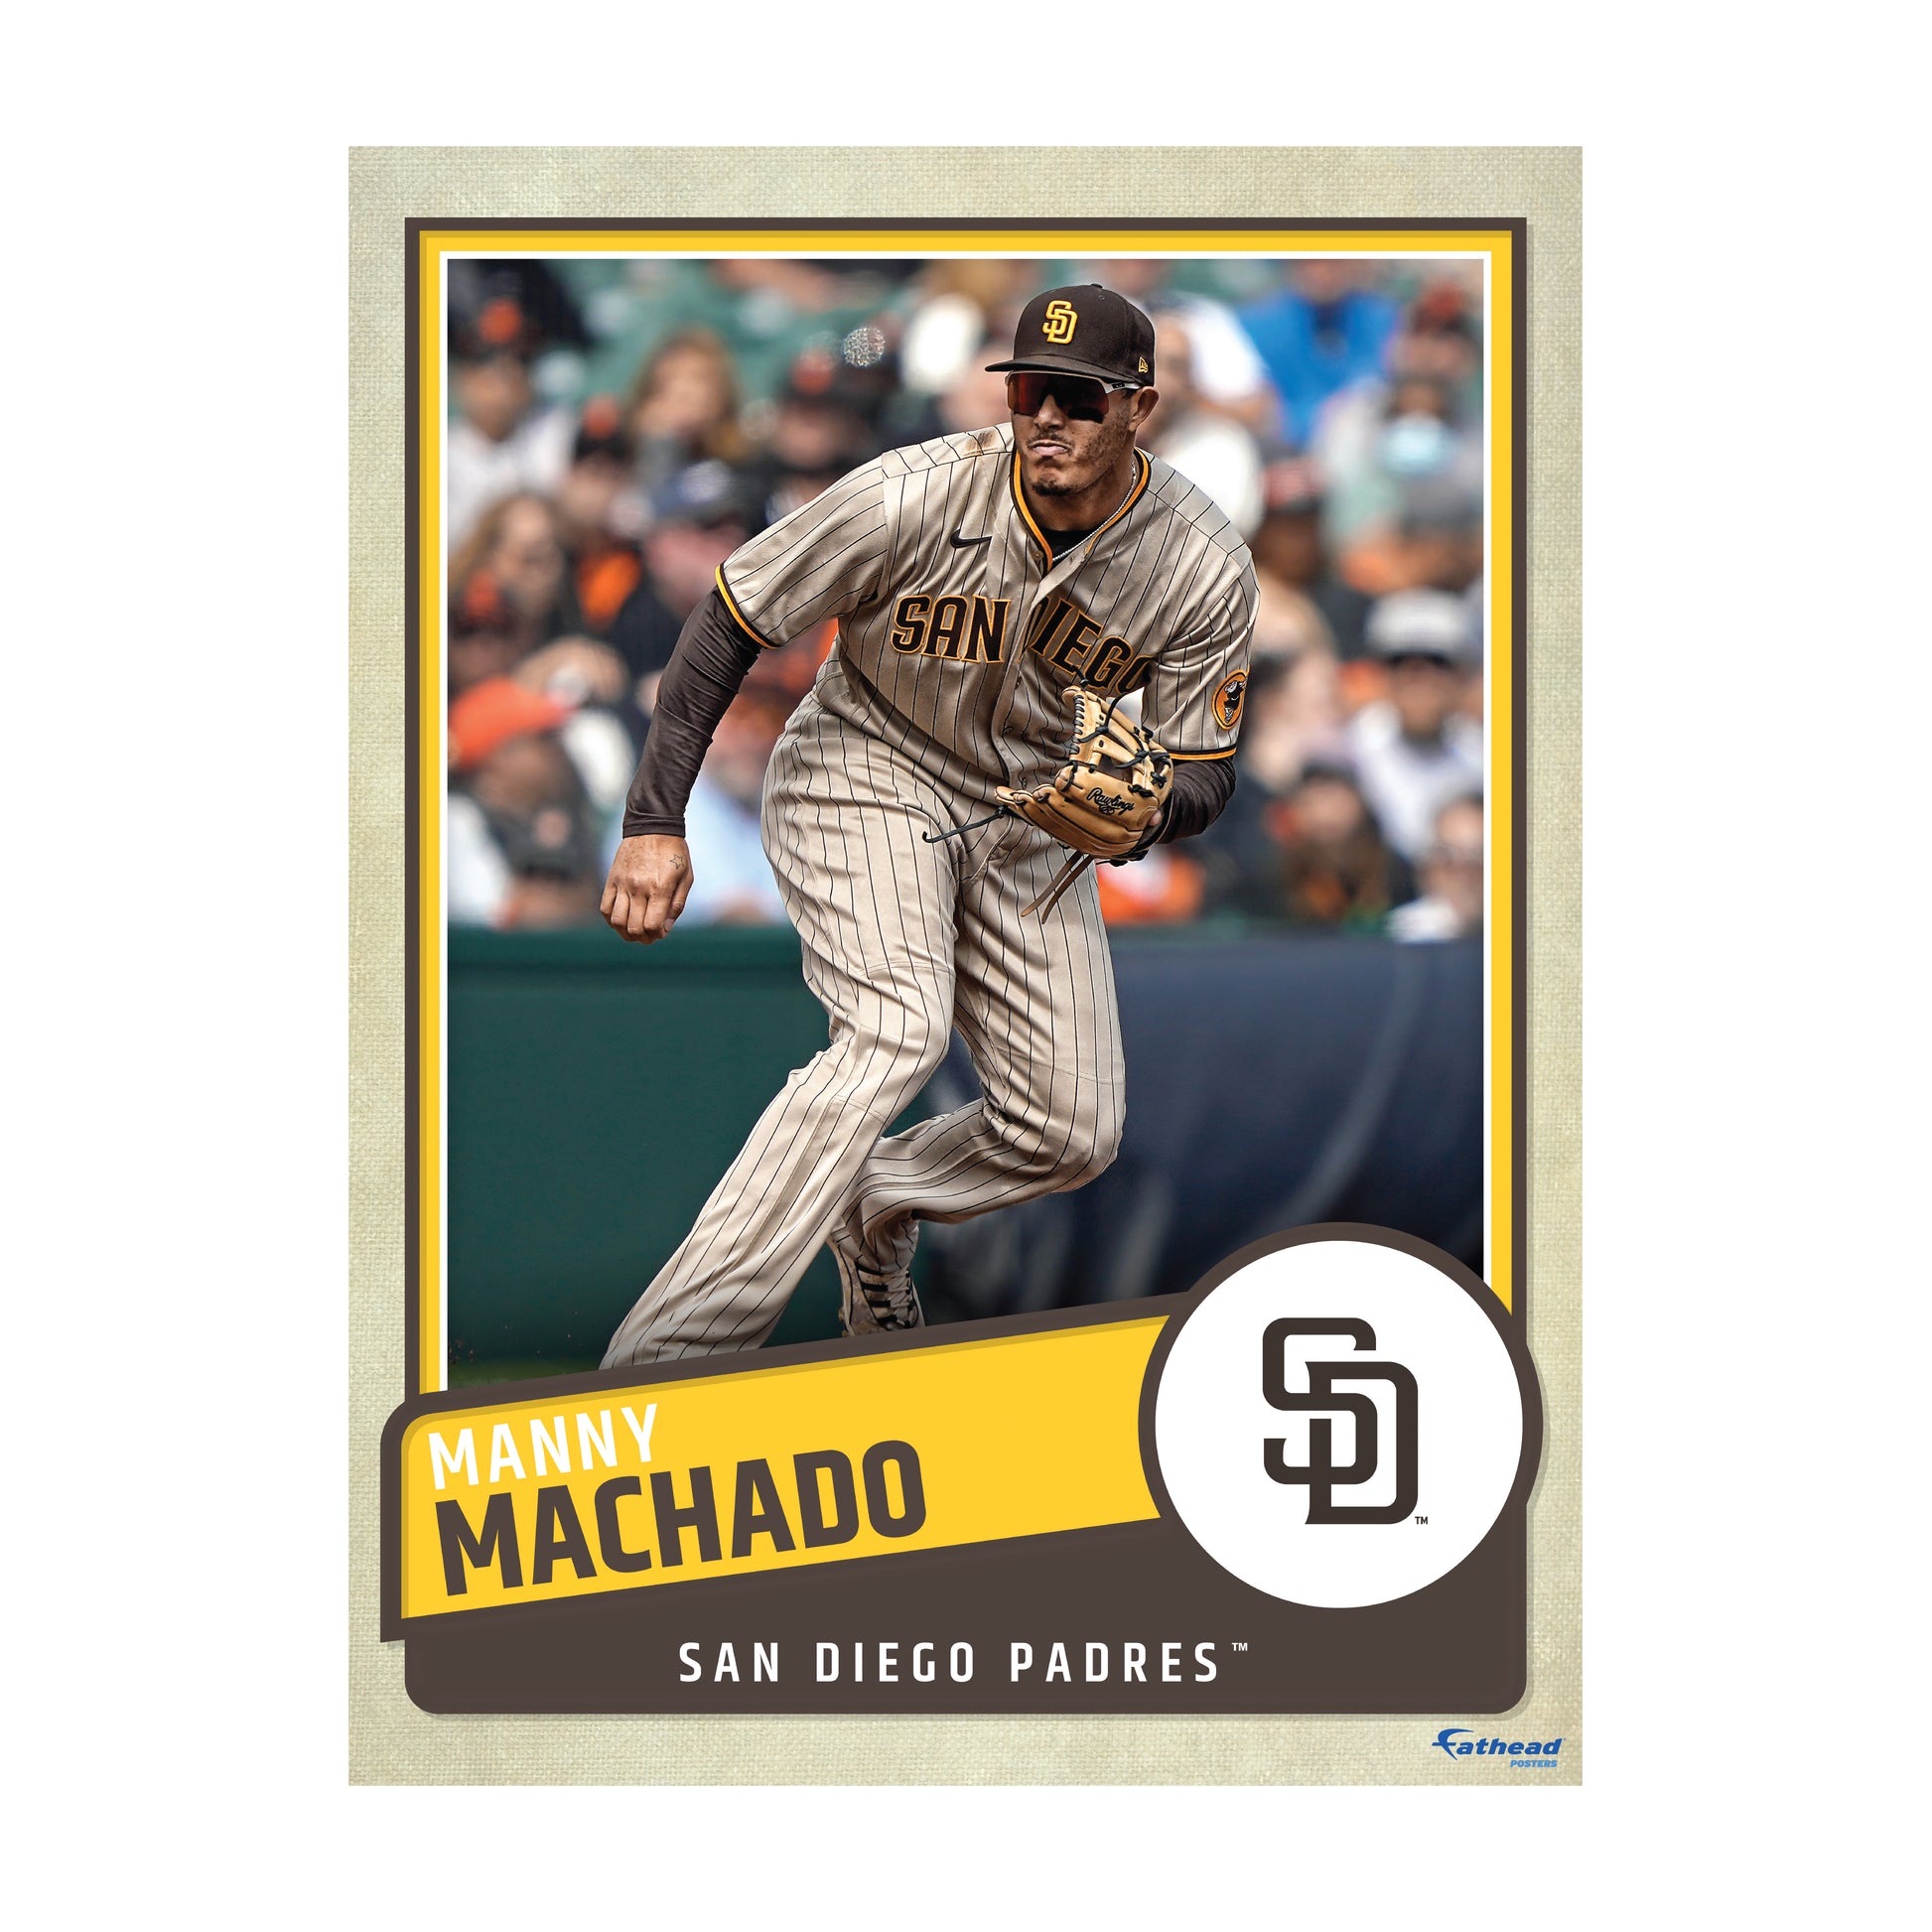 Manny Machado Black MLB Jerseys for sale